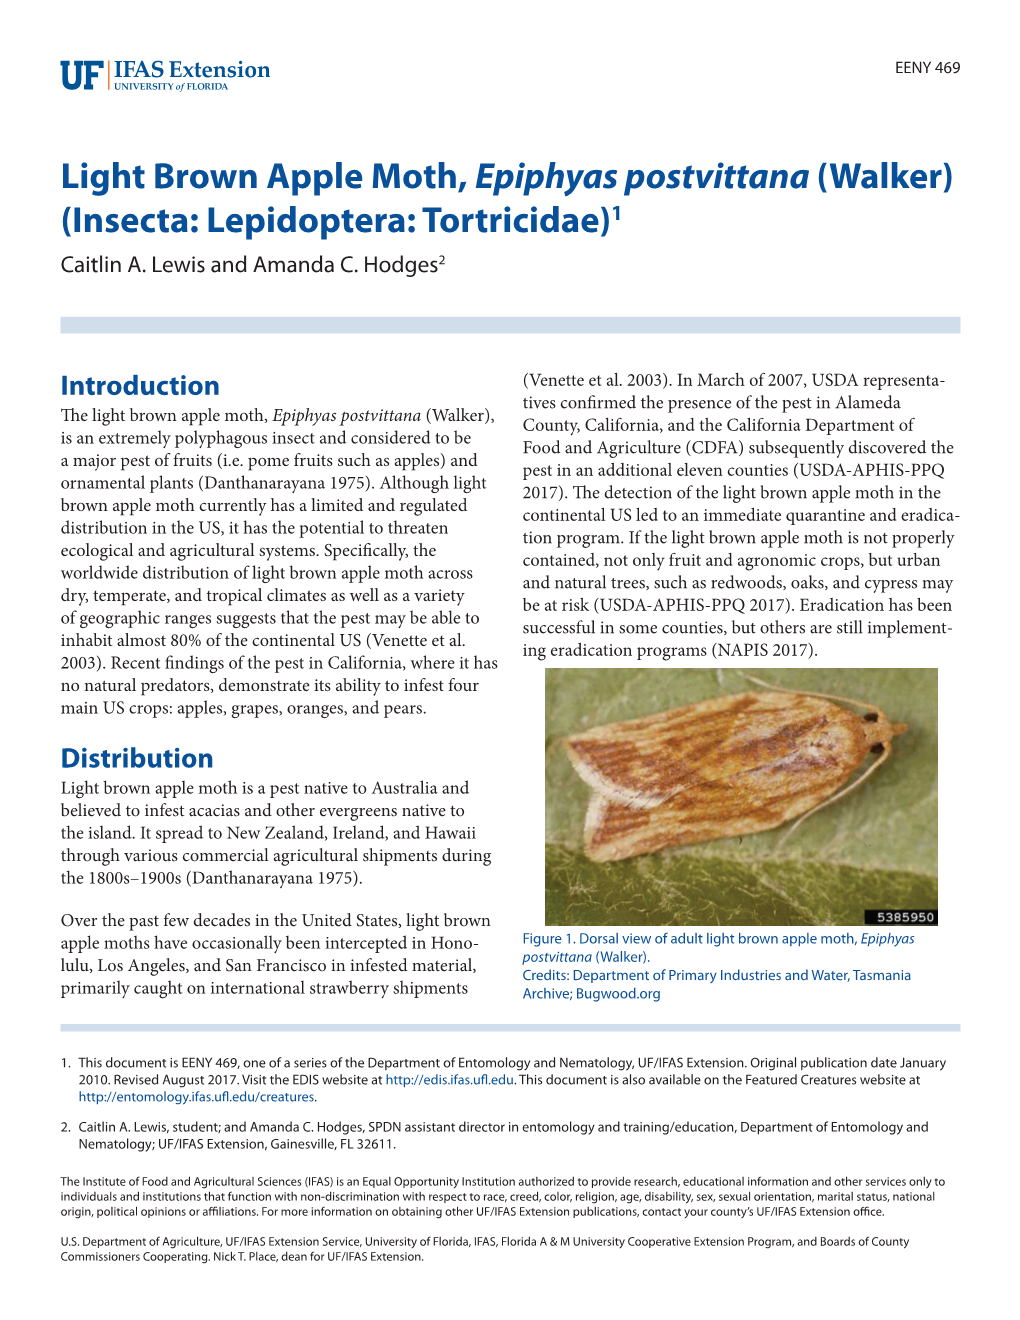 Light Brown Apple Moth, Epiphyas Postvittana (Walker) (Insecta: Lepidoptera: Tortricidae)1 Caitlin A